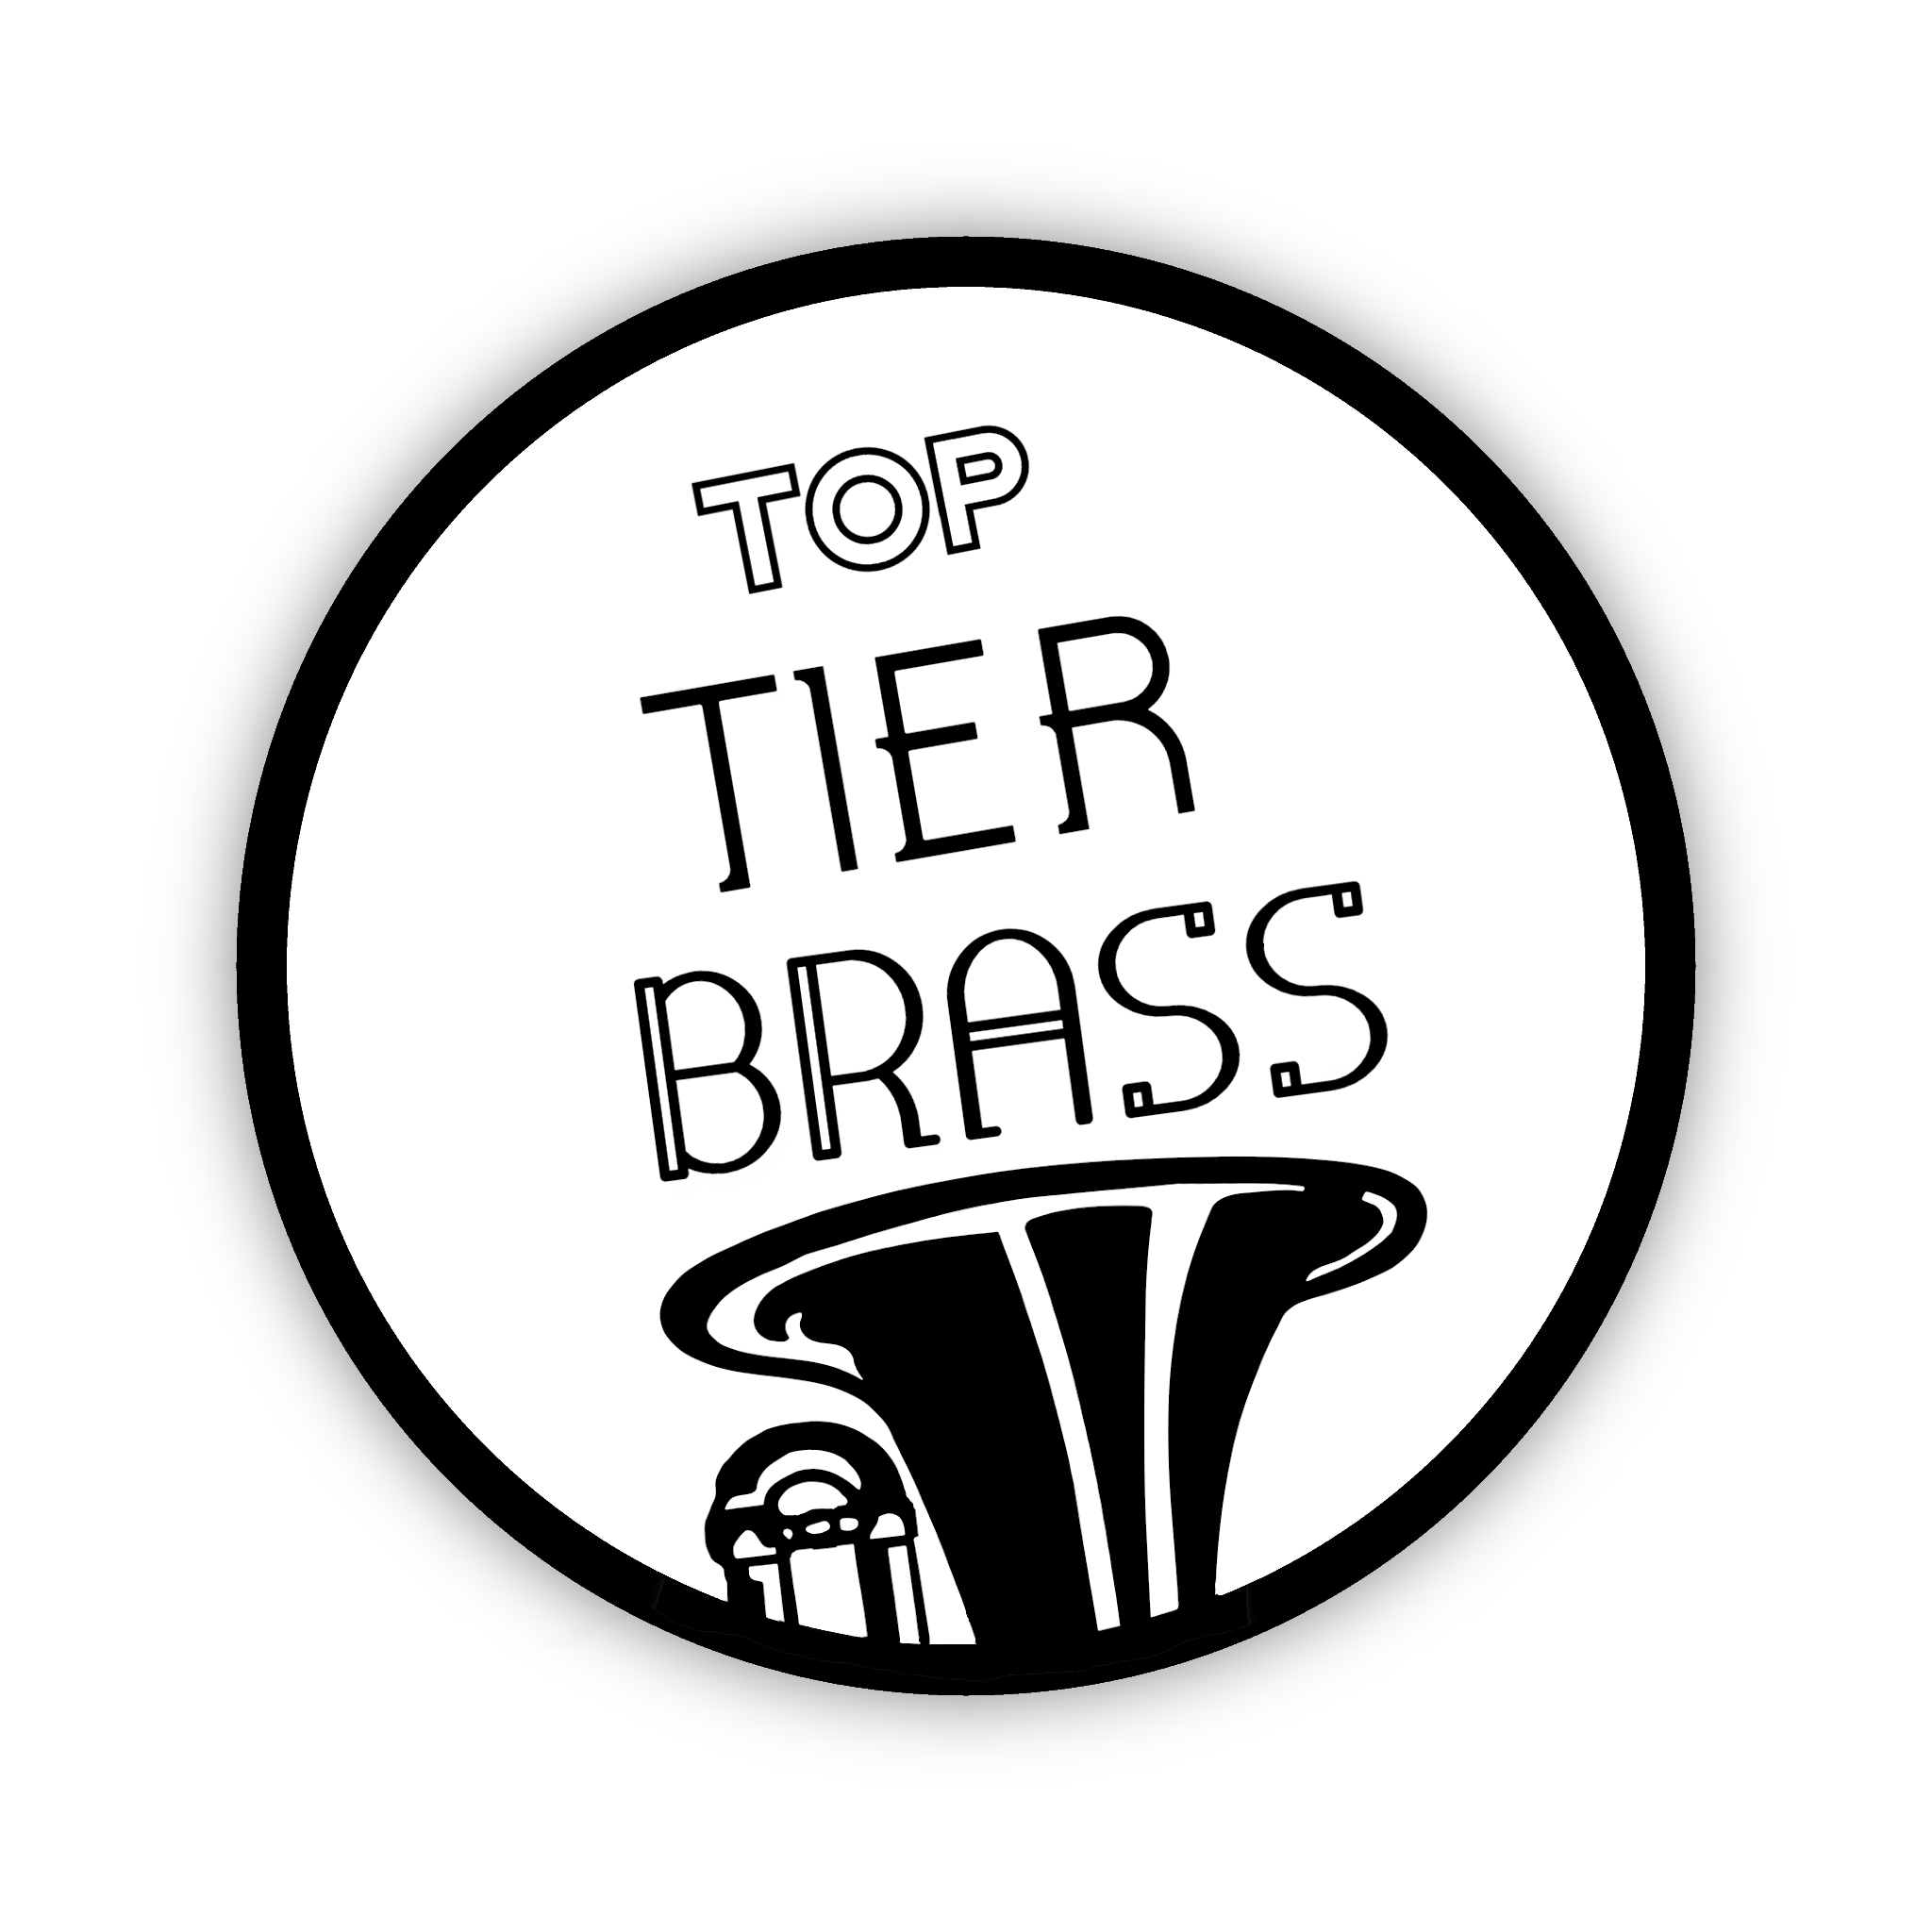 Top Tier Brass